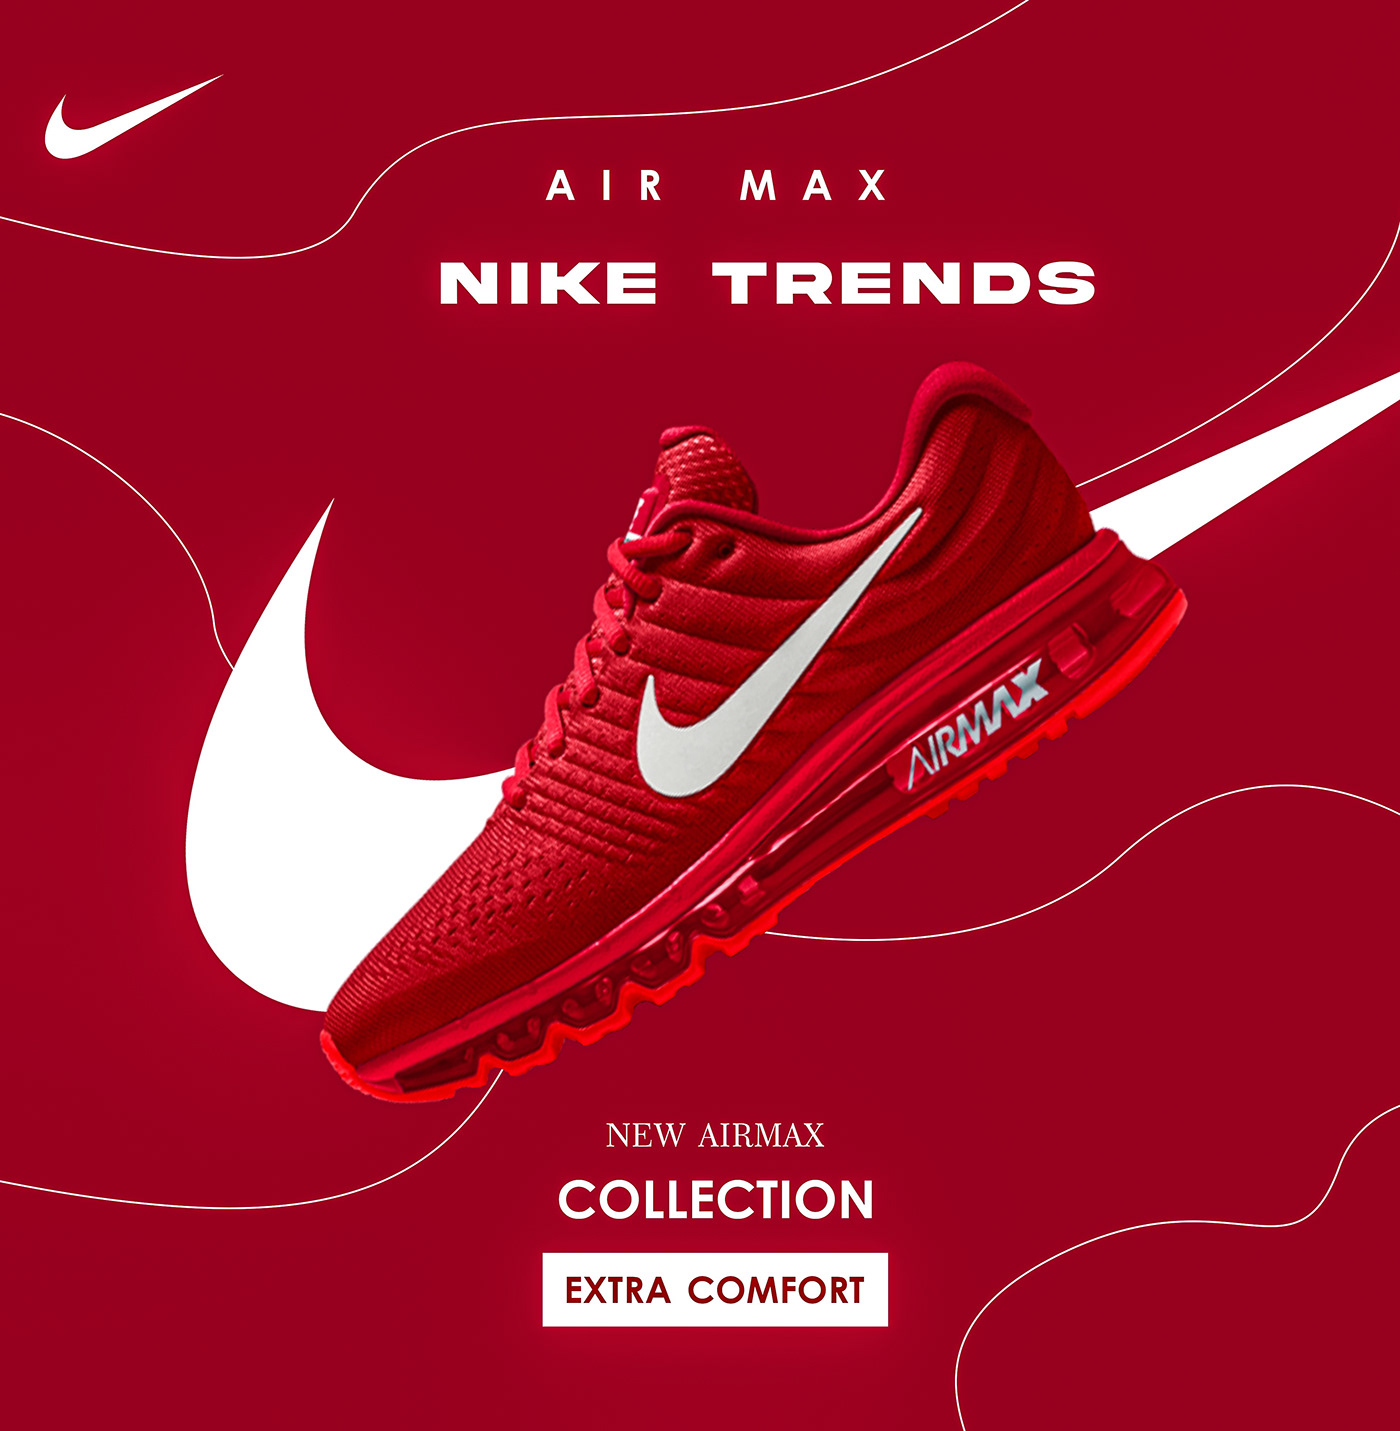 Nike airmax shoes Poster Design posters Social media post